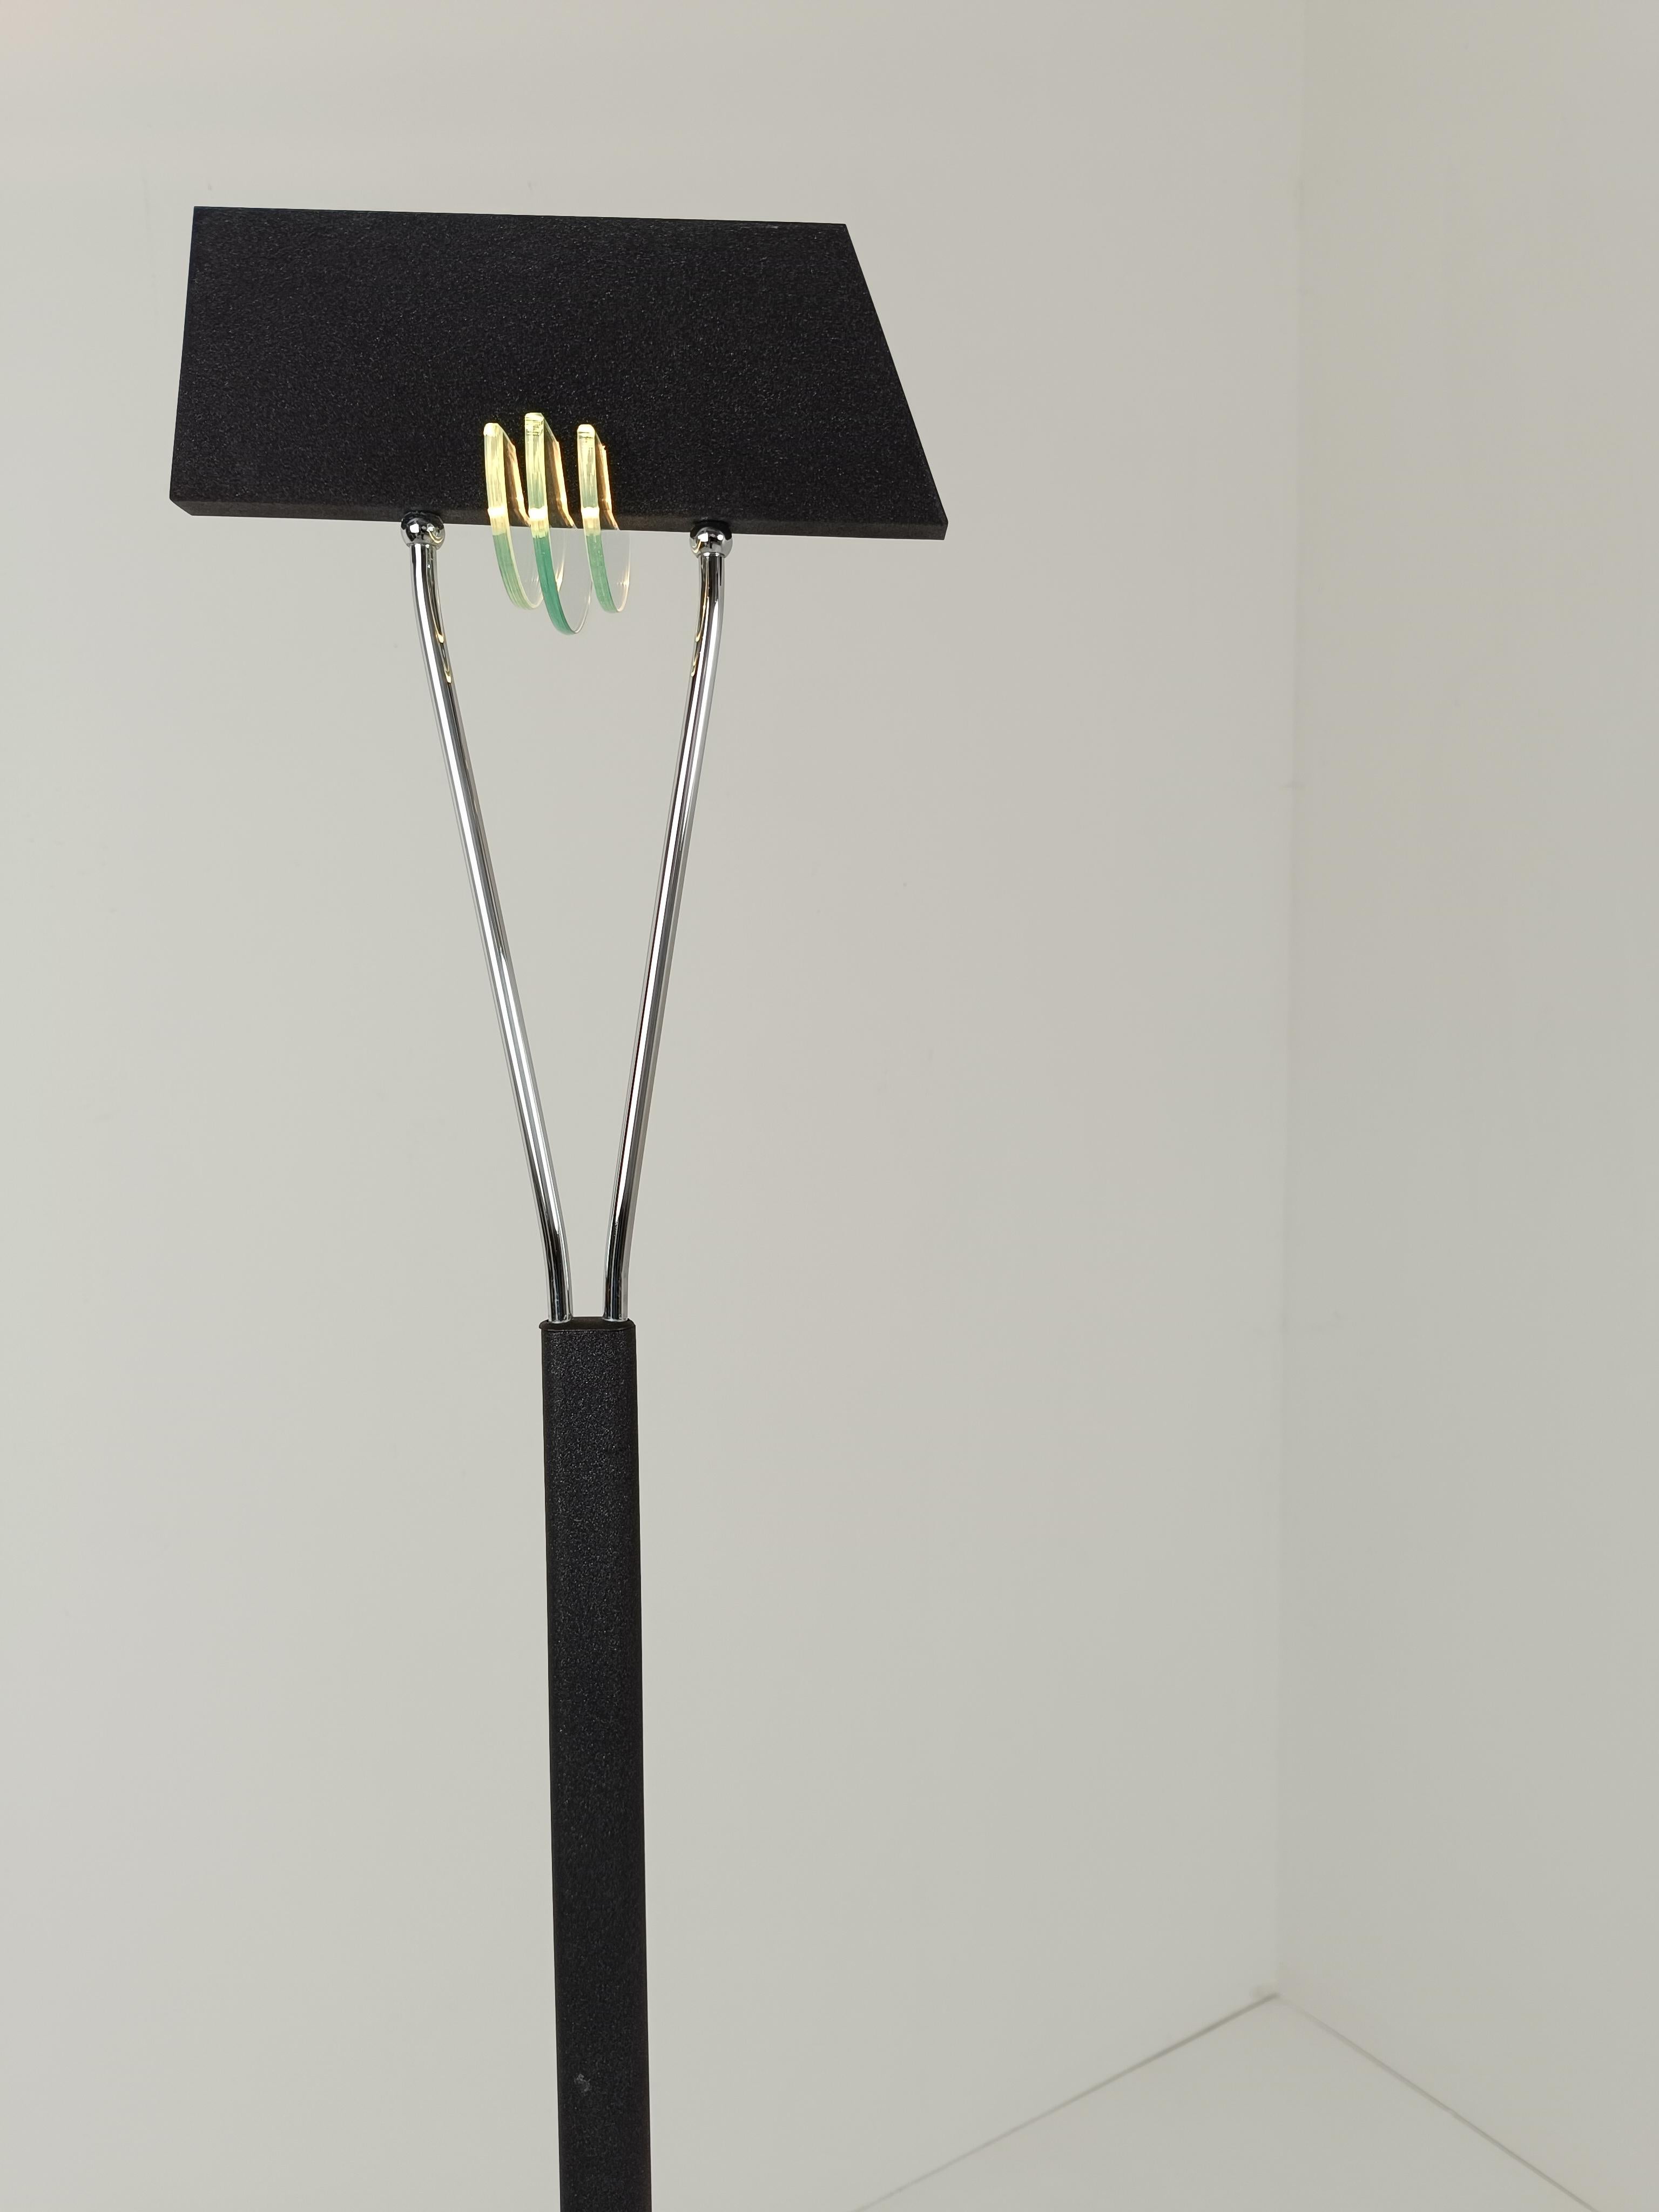 Italian Post modern Floor Lamp in the Style of Fontana Arte, 80s / 90s  For Sale 1